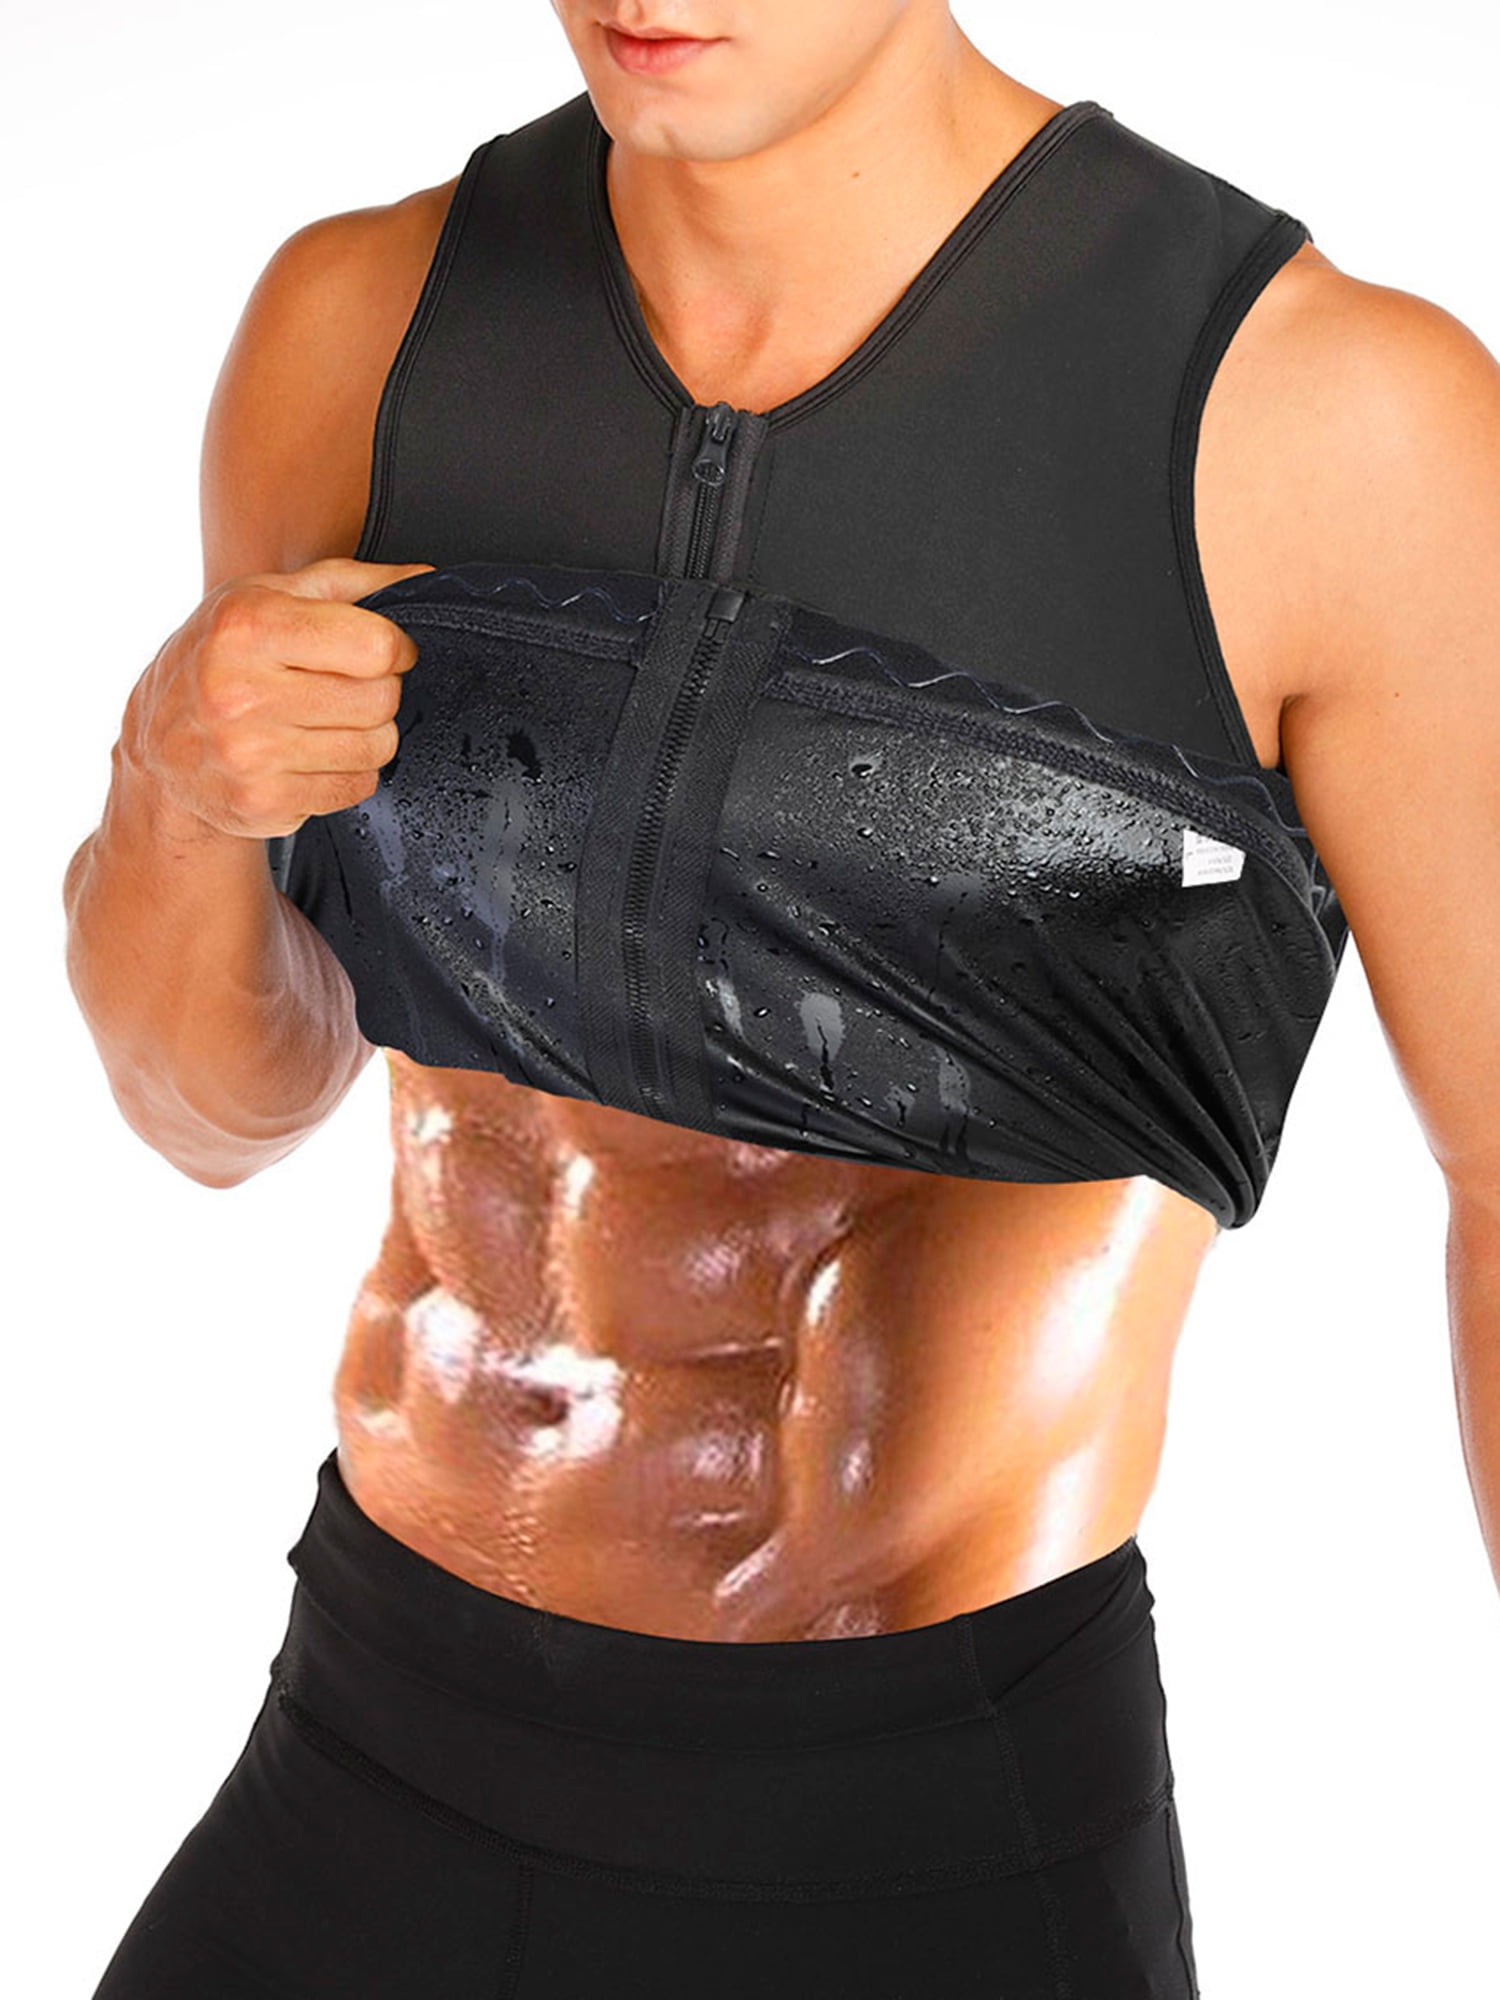 Coomir Men Sweat Vest Neoprene Body Shaper Corset Shapewear for Slimming Waist Trainer Weight Loss